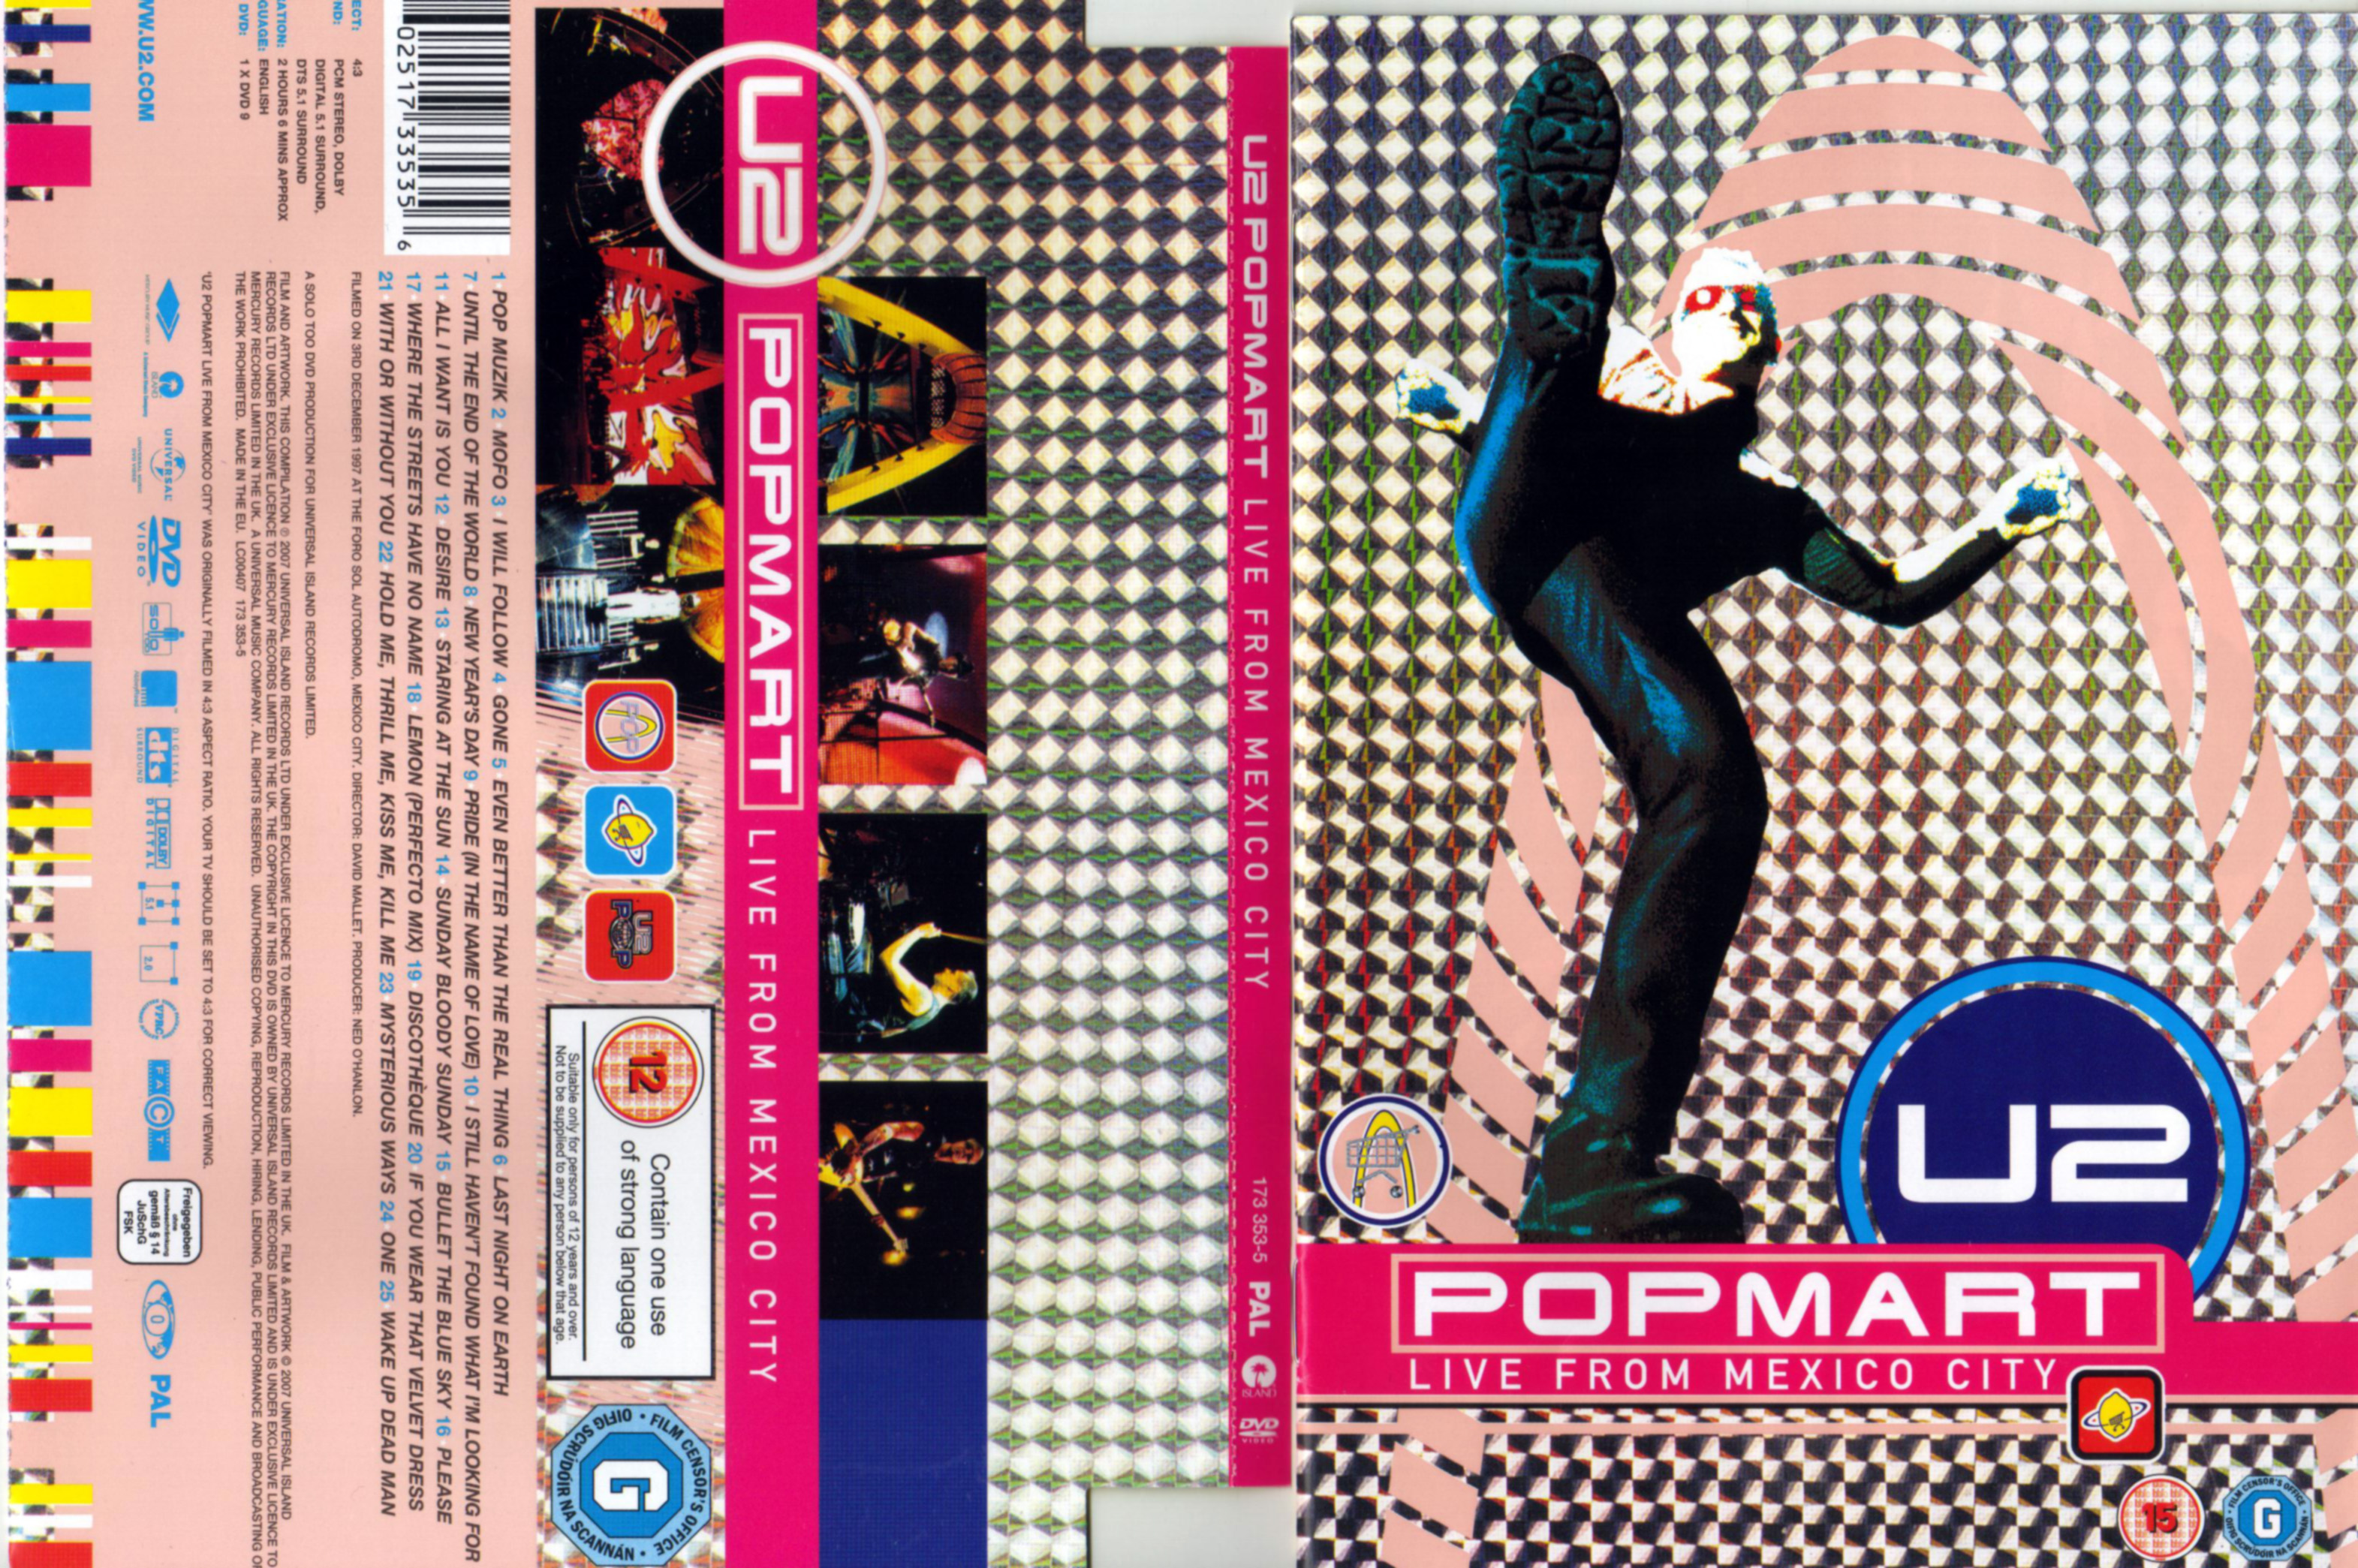 Jaquette DVD U2 Popmart